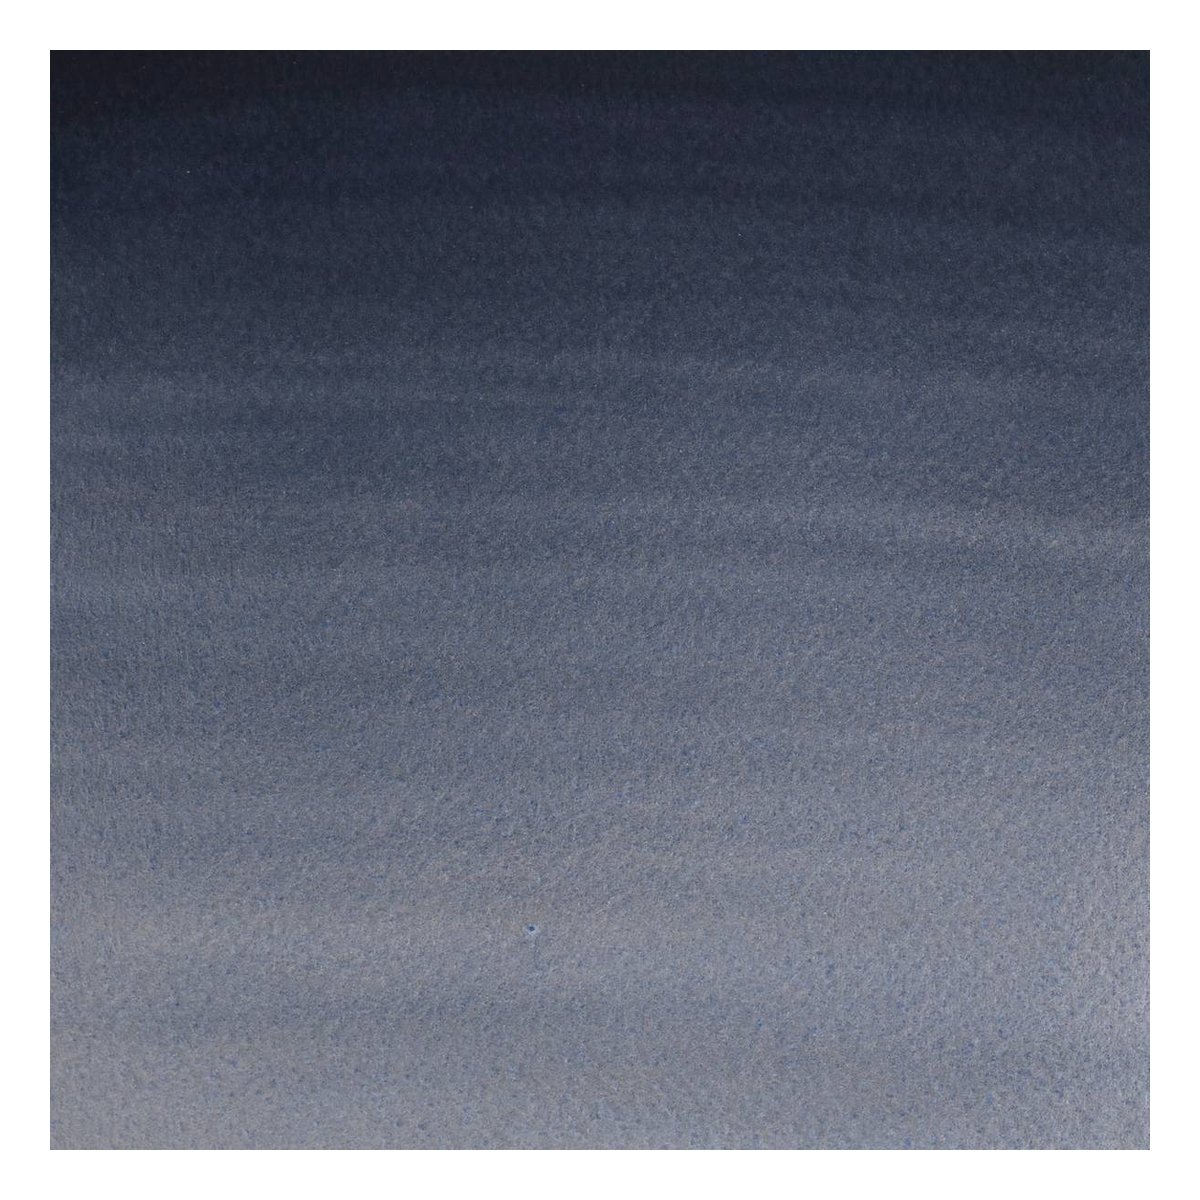 Winsor & Newton Cotman Paynes Grey Watercolour Tube 8ml (465)